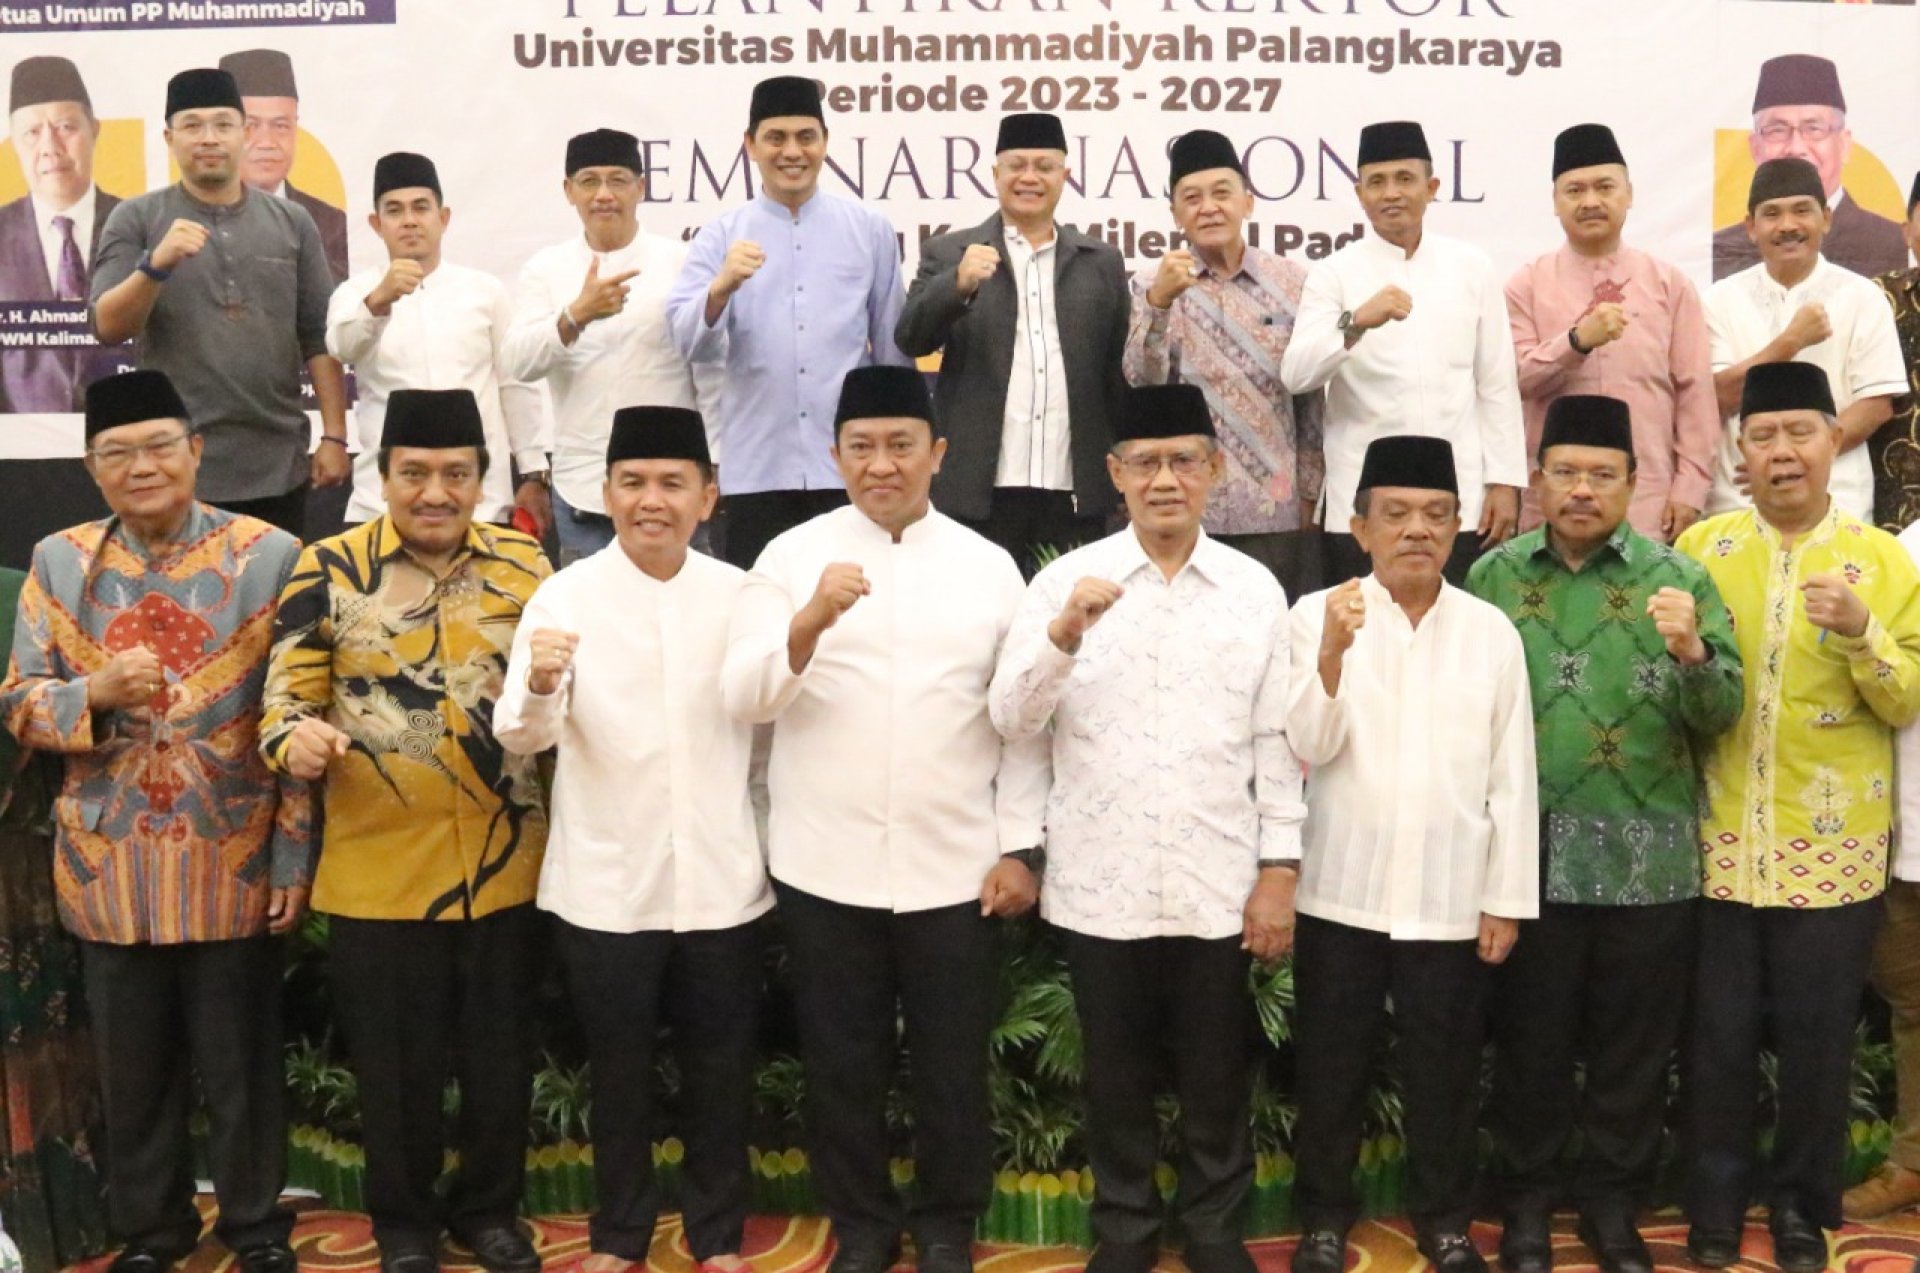 Wagub Kalteng Ikuti Tabligh Akbar Bersama Ketua Umum PP Muhammadiyah